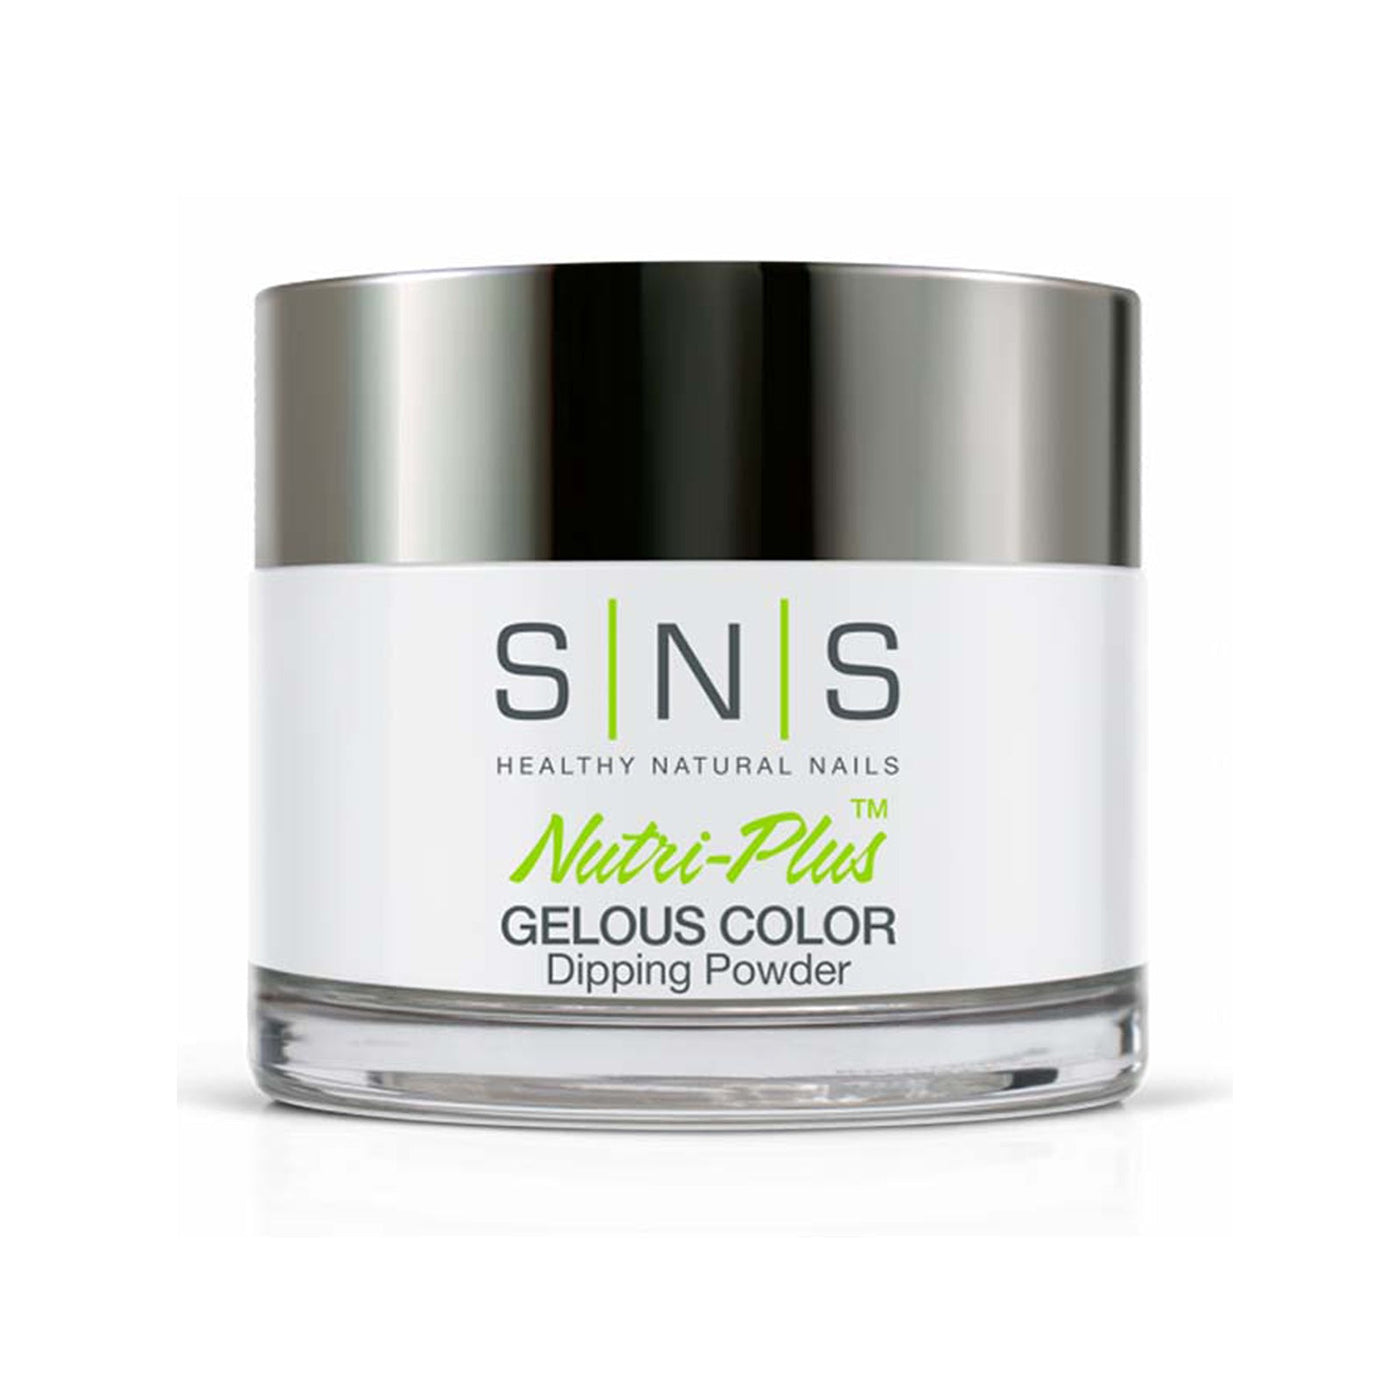 SNS Gelous Color Dipping Powder SY09 Sugar Sugar (43g) packaging